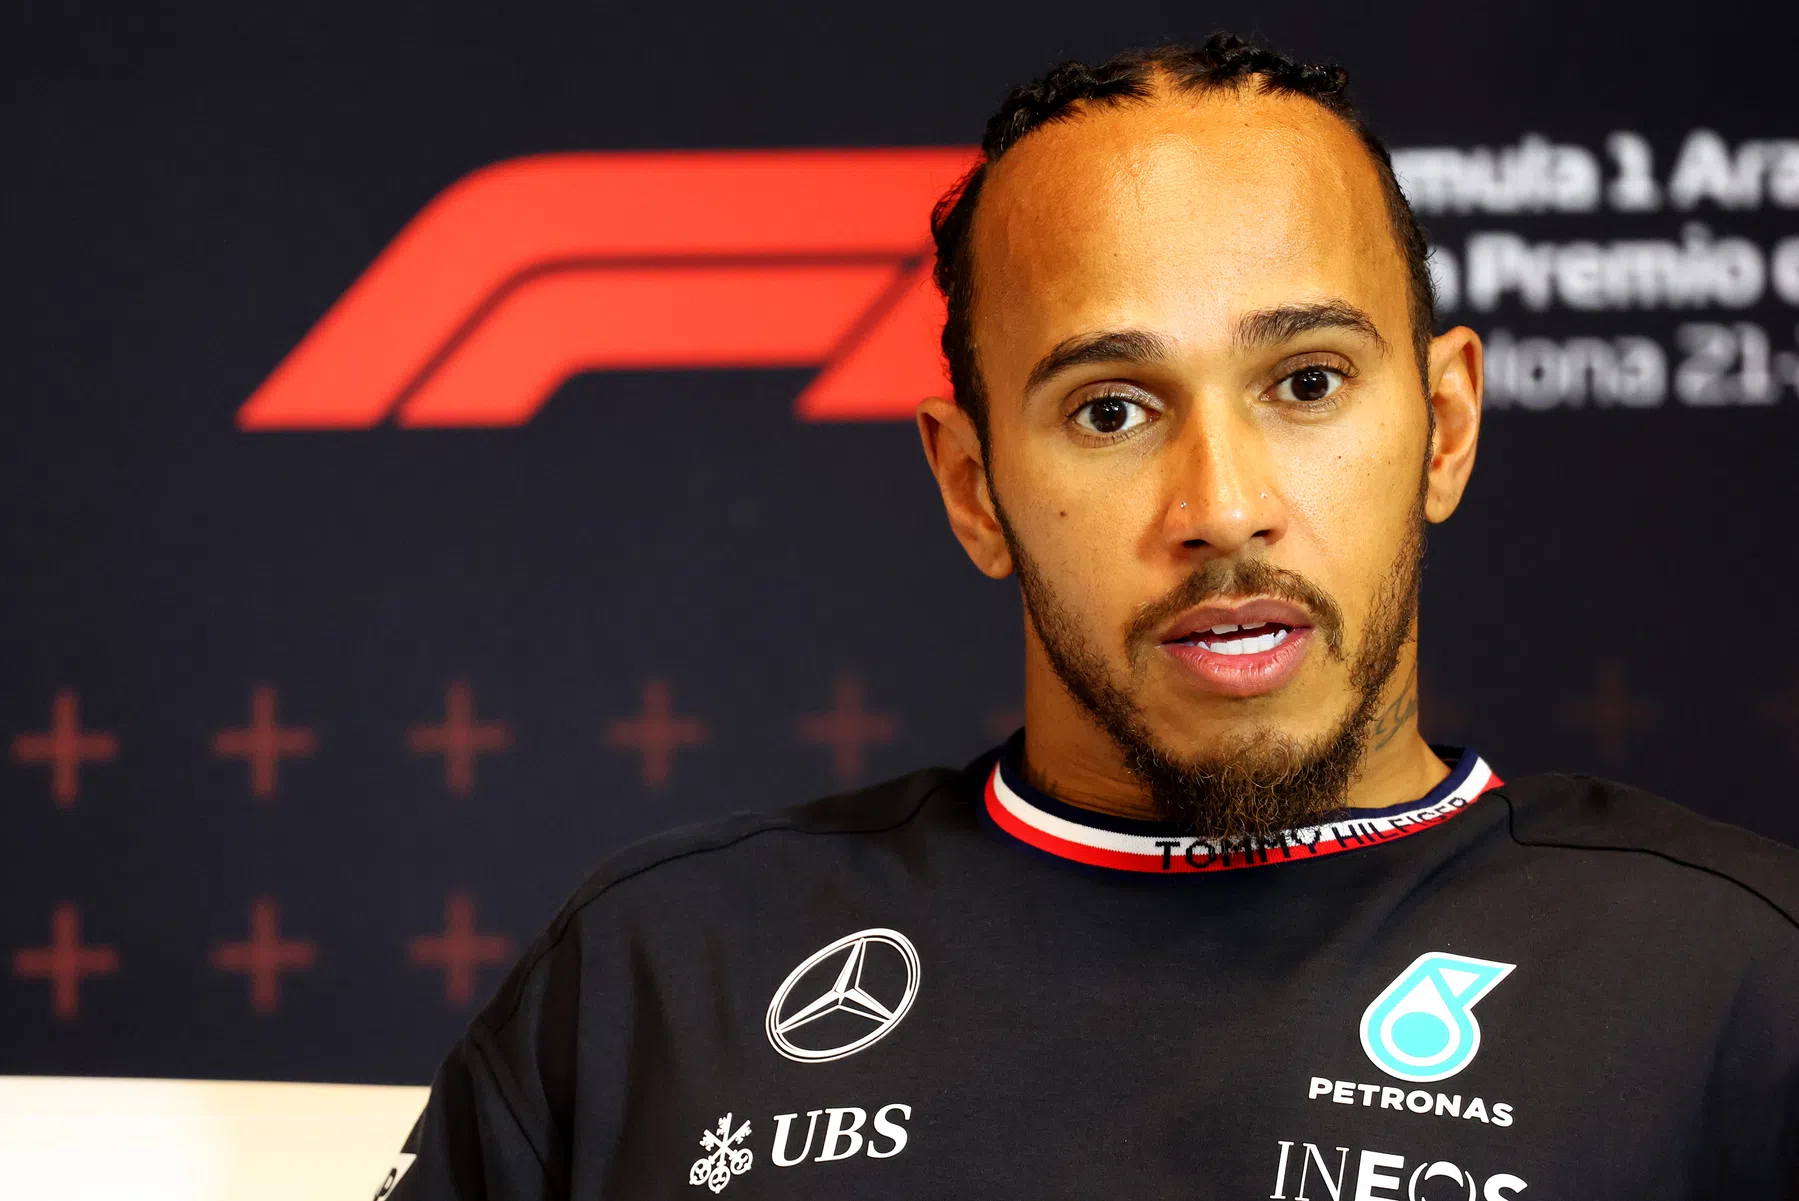 Hamilton upset with his own performance in Austria